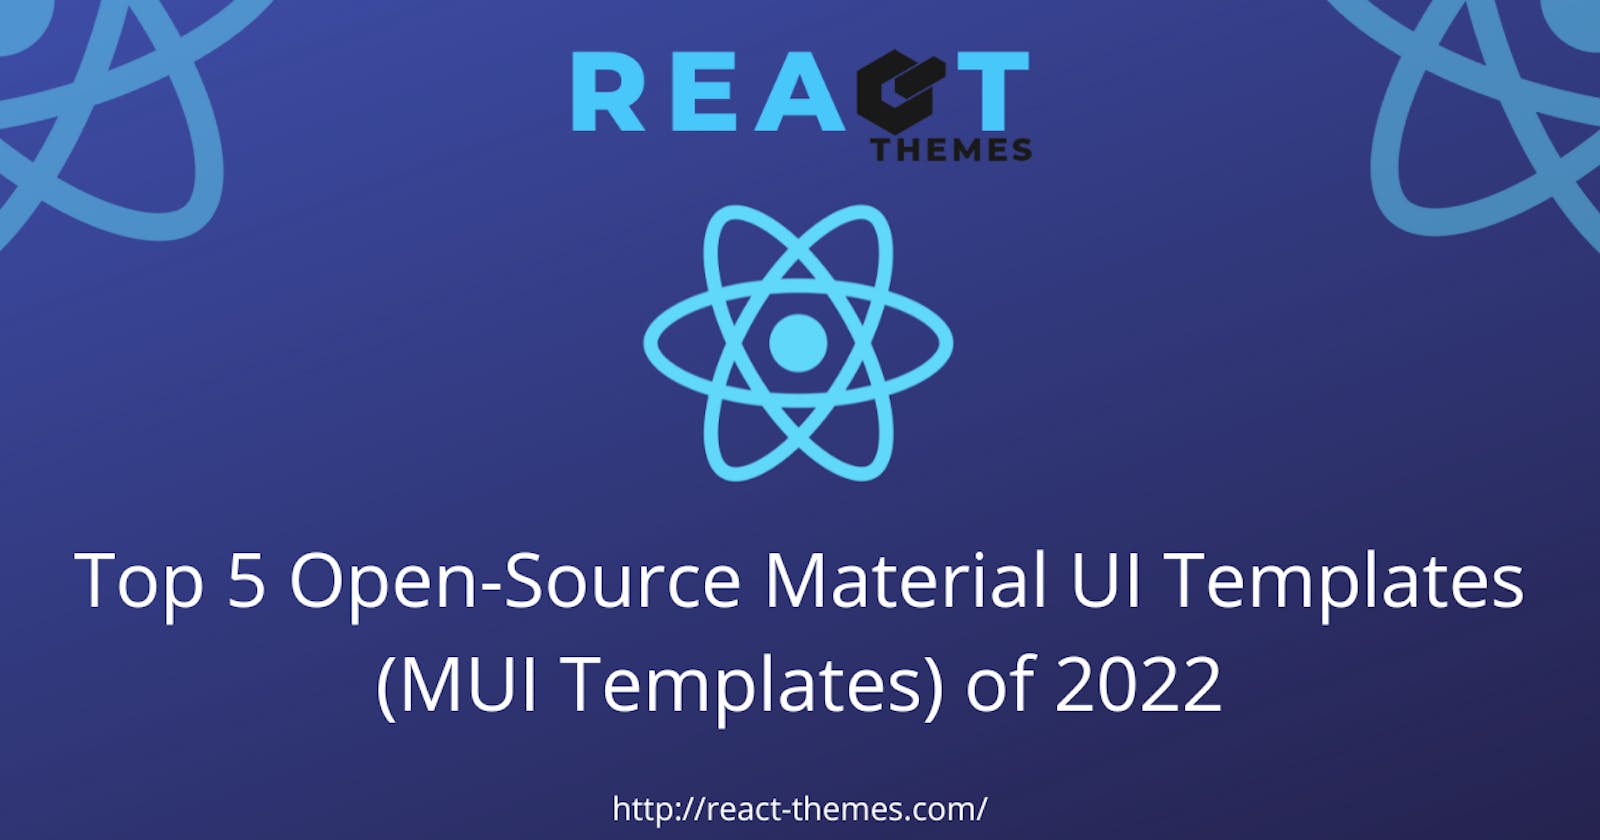 Top 5 Open-Source Material UI Templates (MUI Templates) of 2022